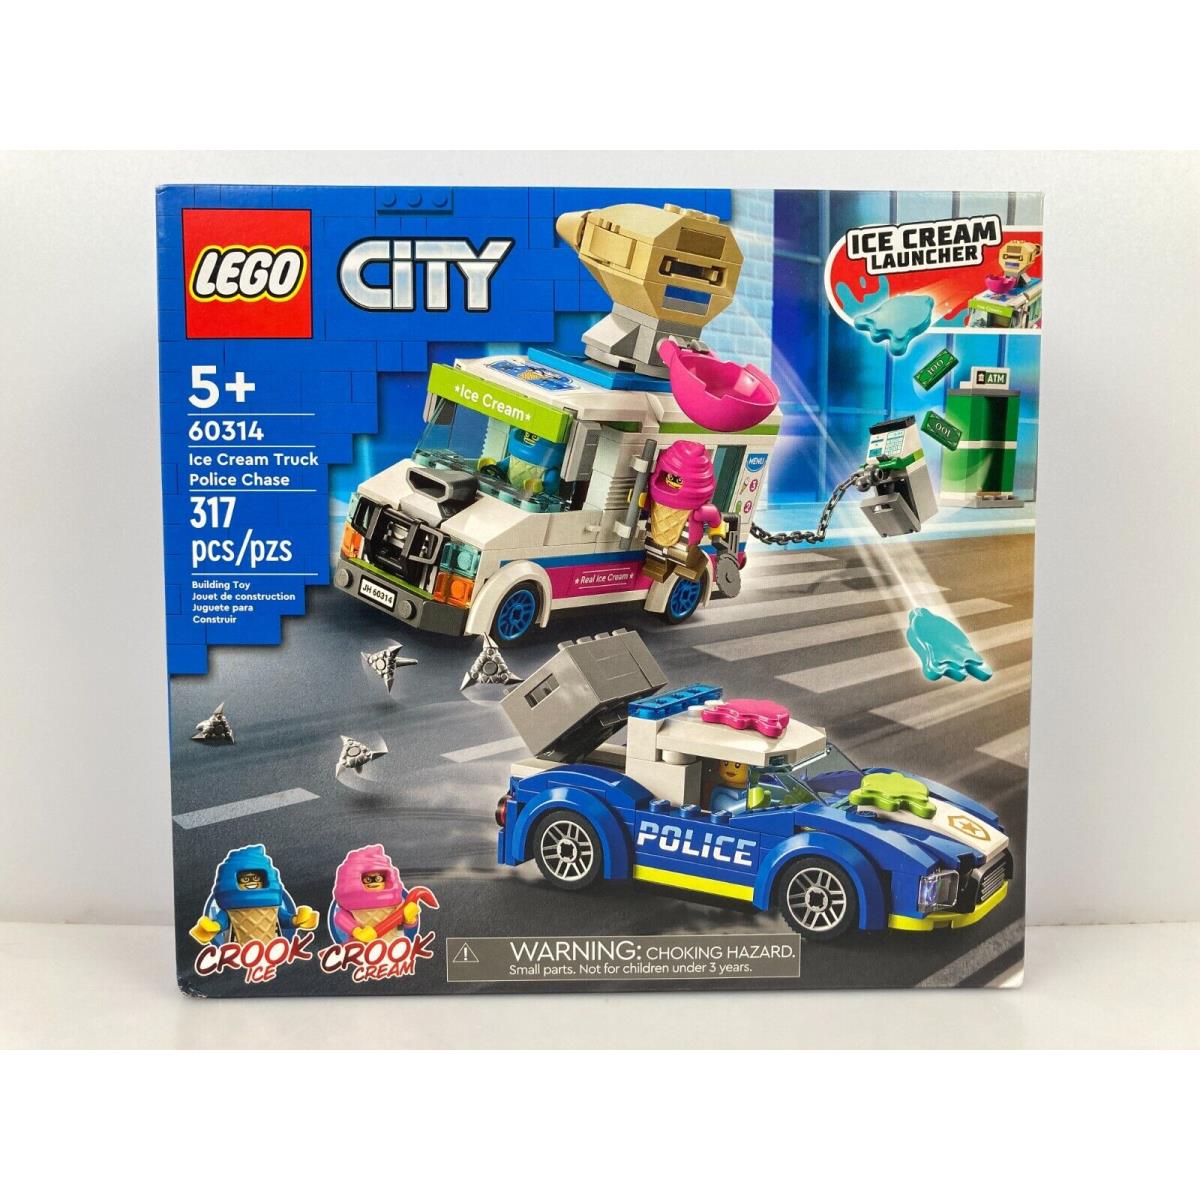 Lego City Ice Cream Truck Police Chase Set Model: 60314 - 317Pcs - Retired